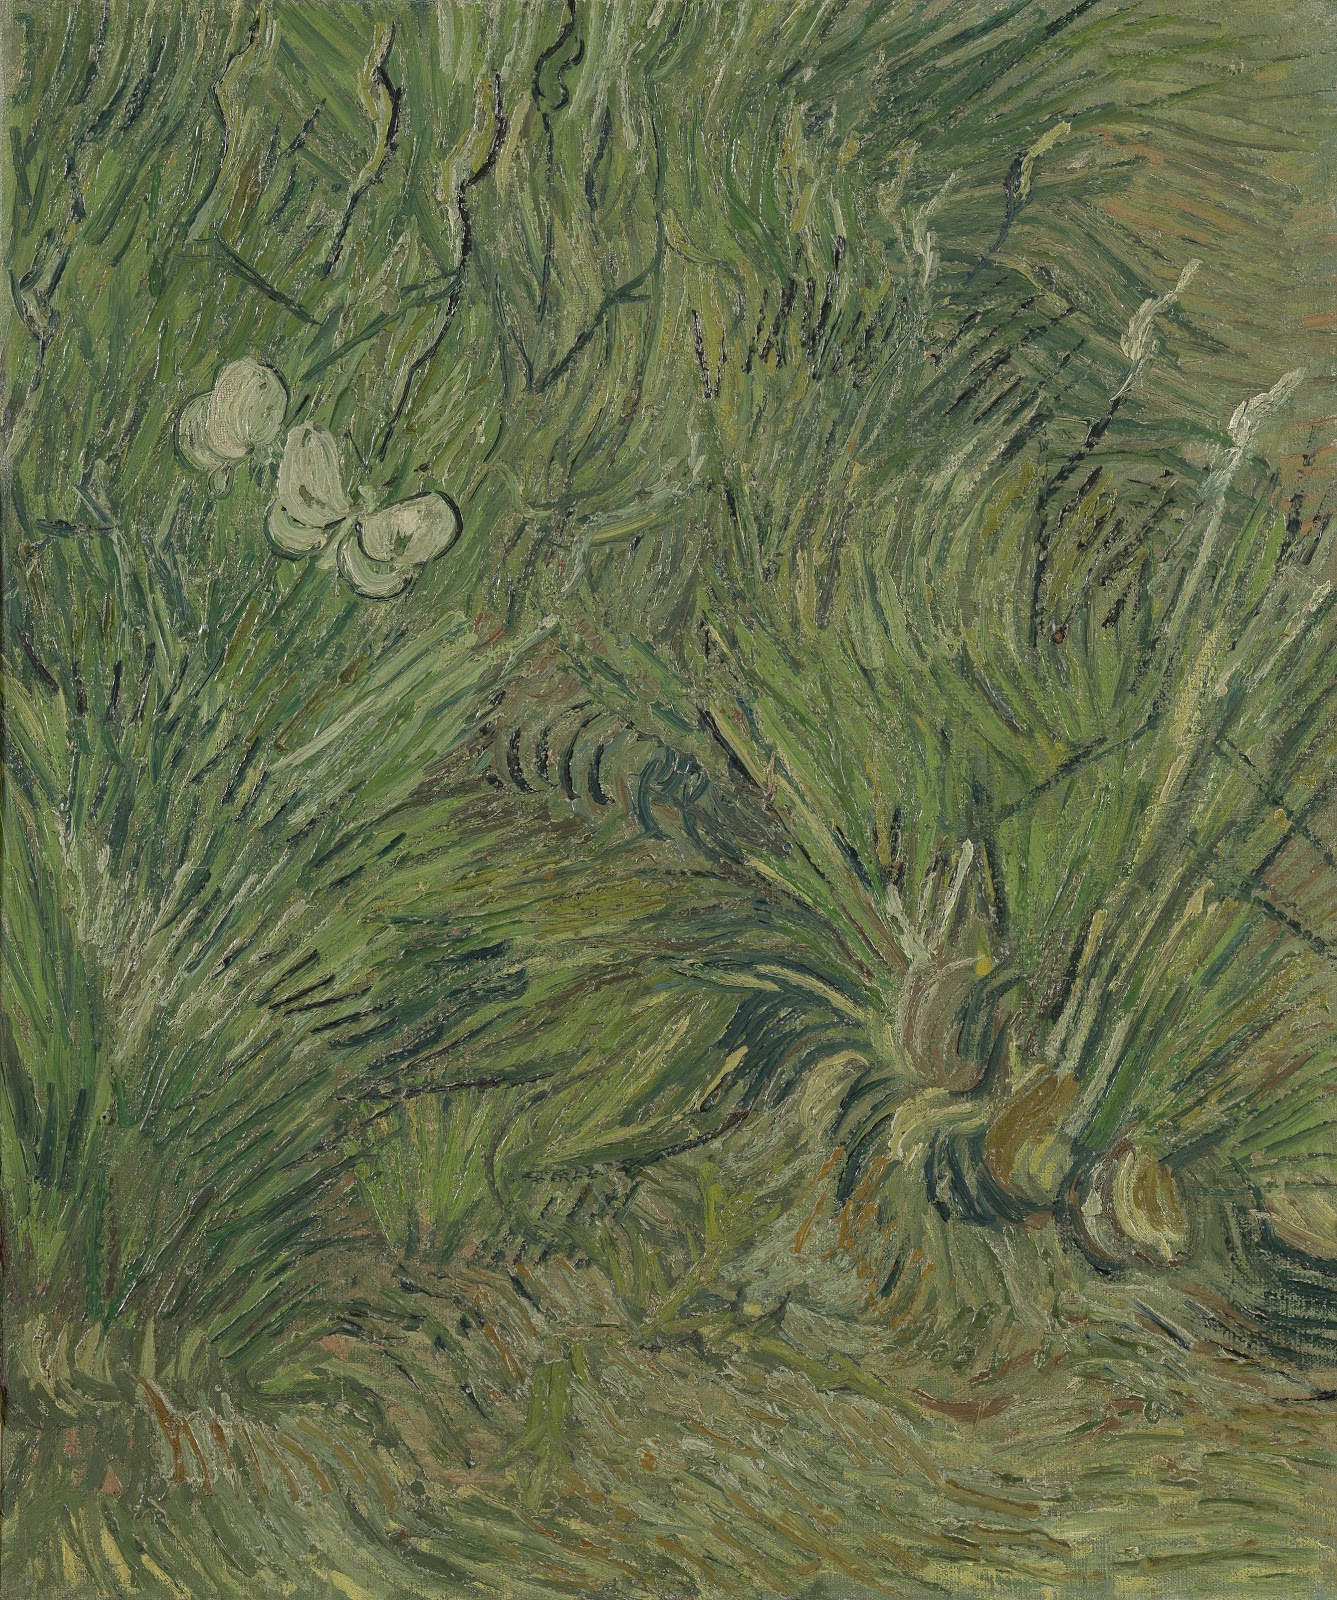 Vincent+Van+Gogh-1853-1890 (881).jpg